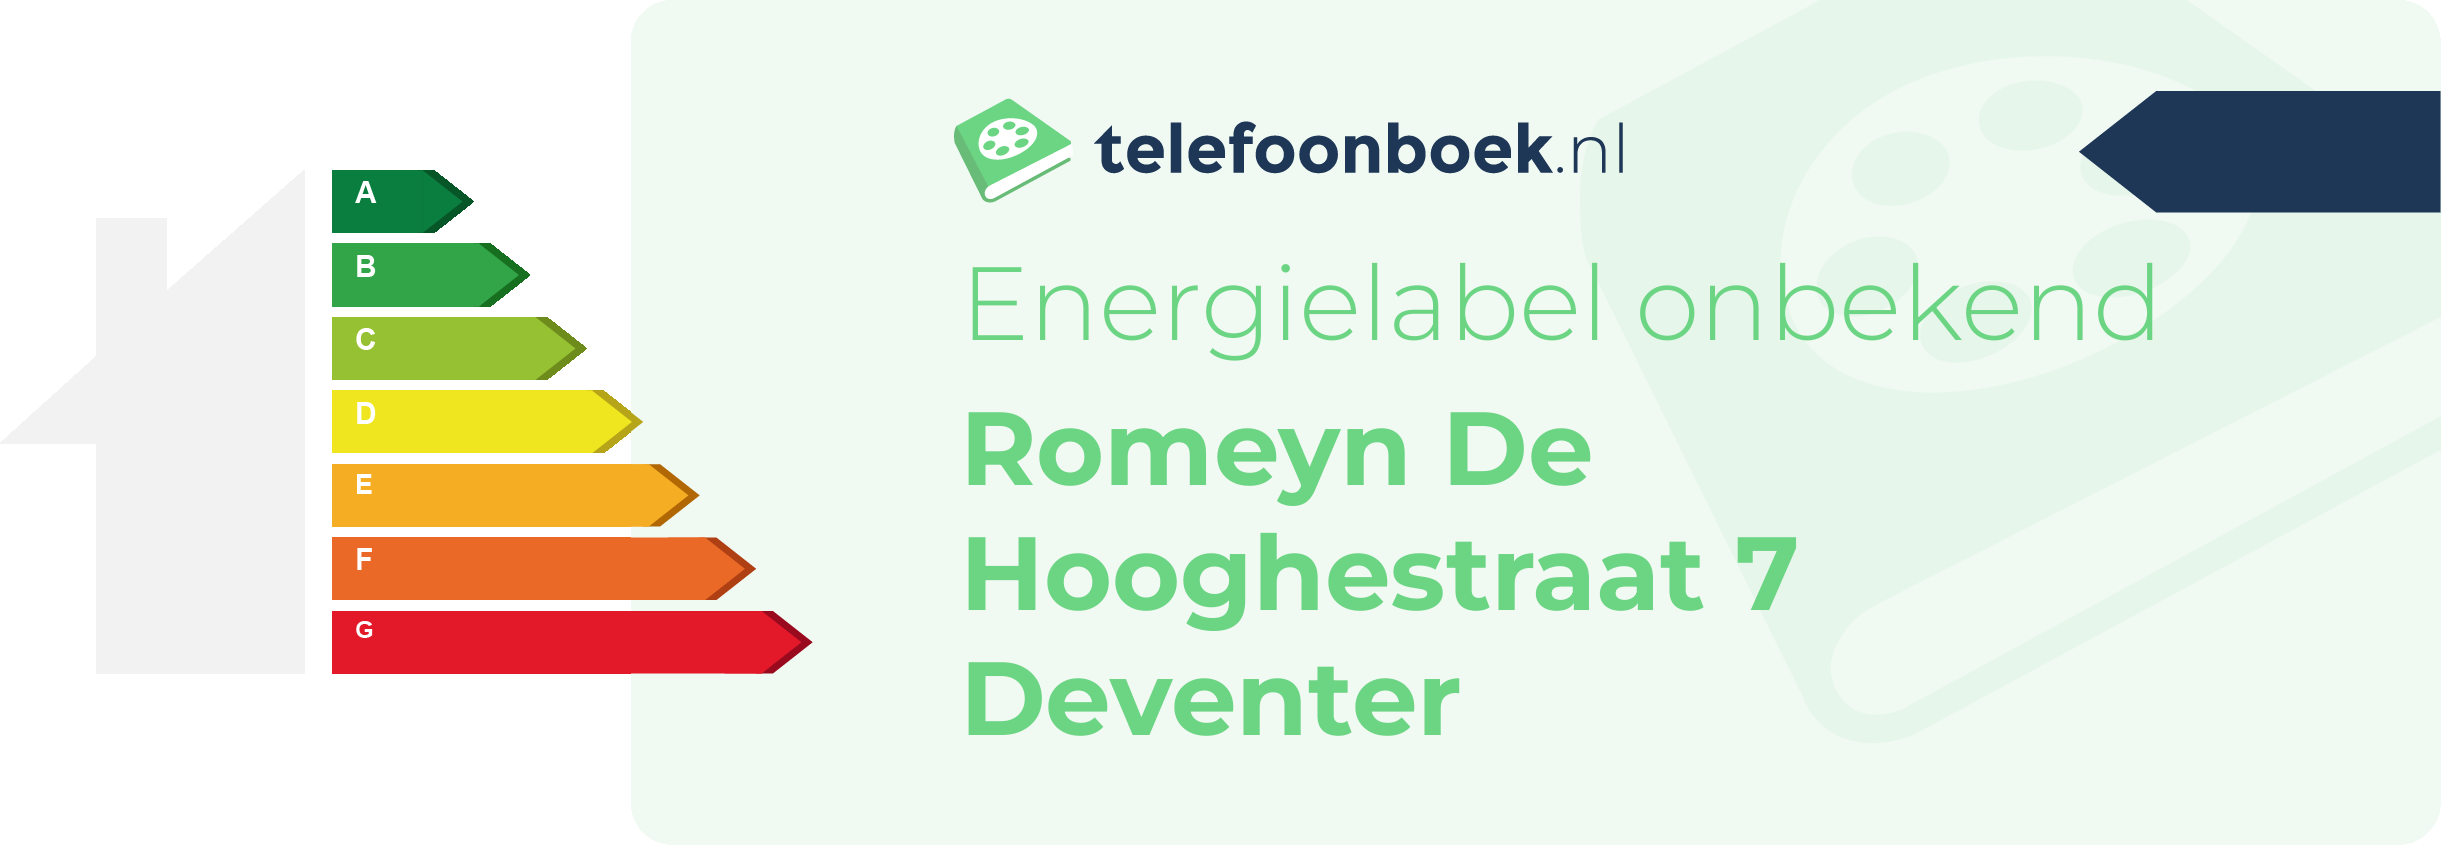 Energielabel Romeyn De Hooghestraat 7 Deventer